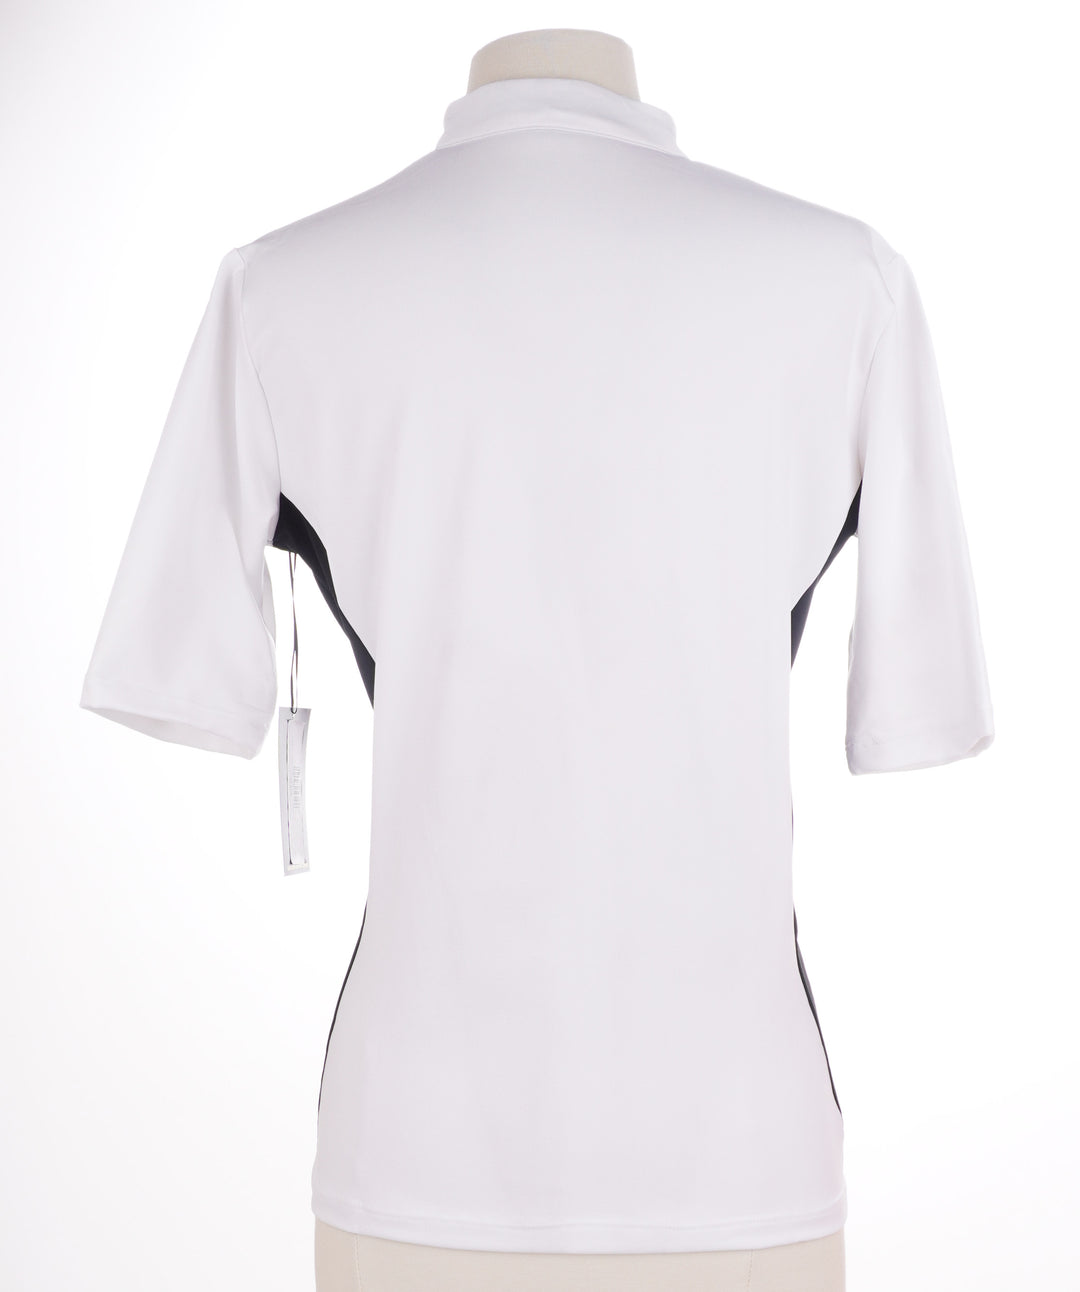 Goldenwear Forgiving Rhinestone Short Sleeve - White/Black - Skorzie